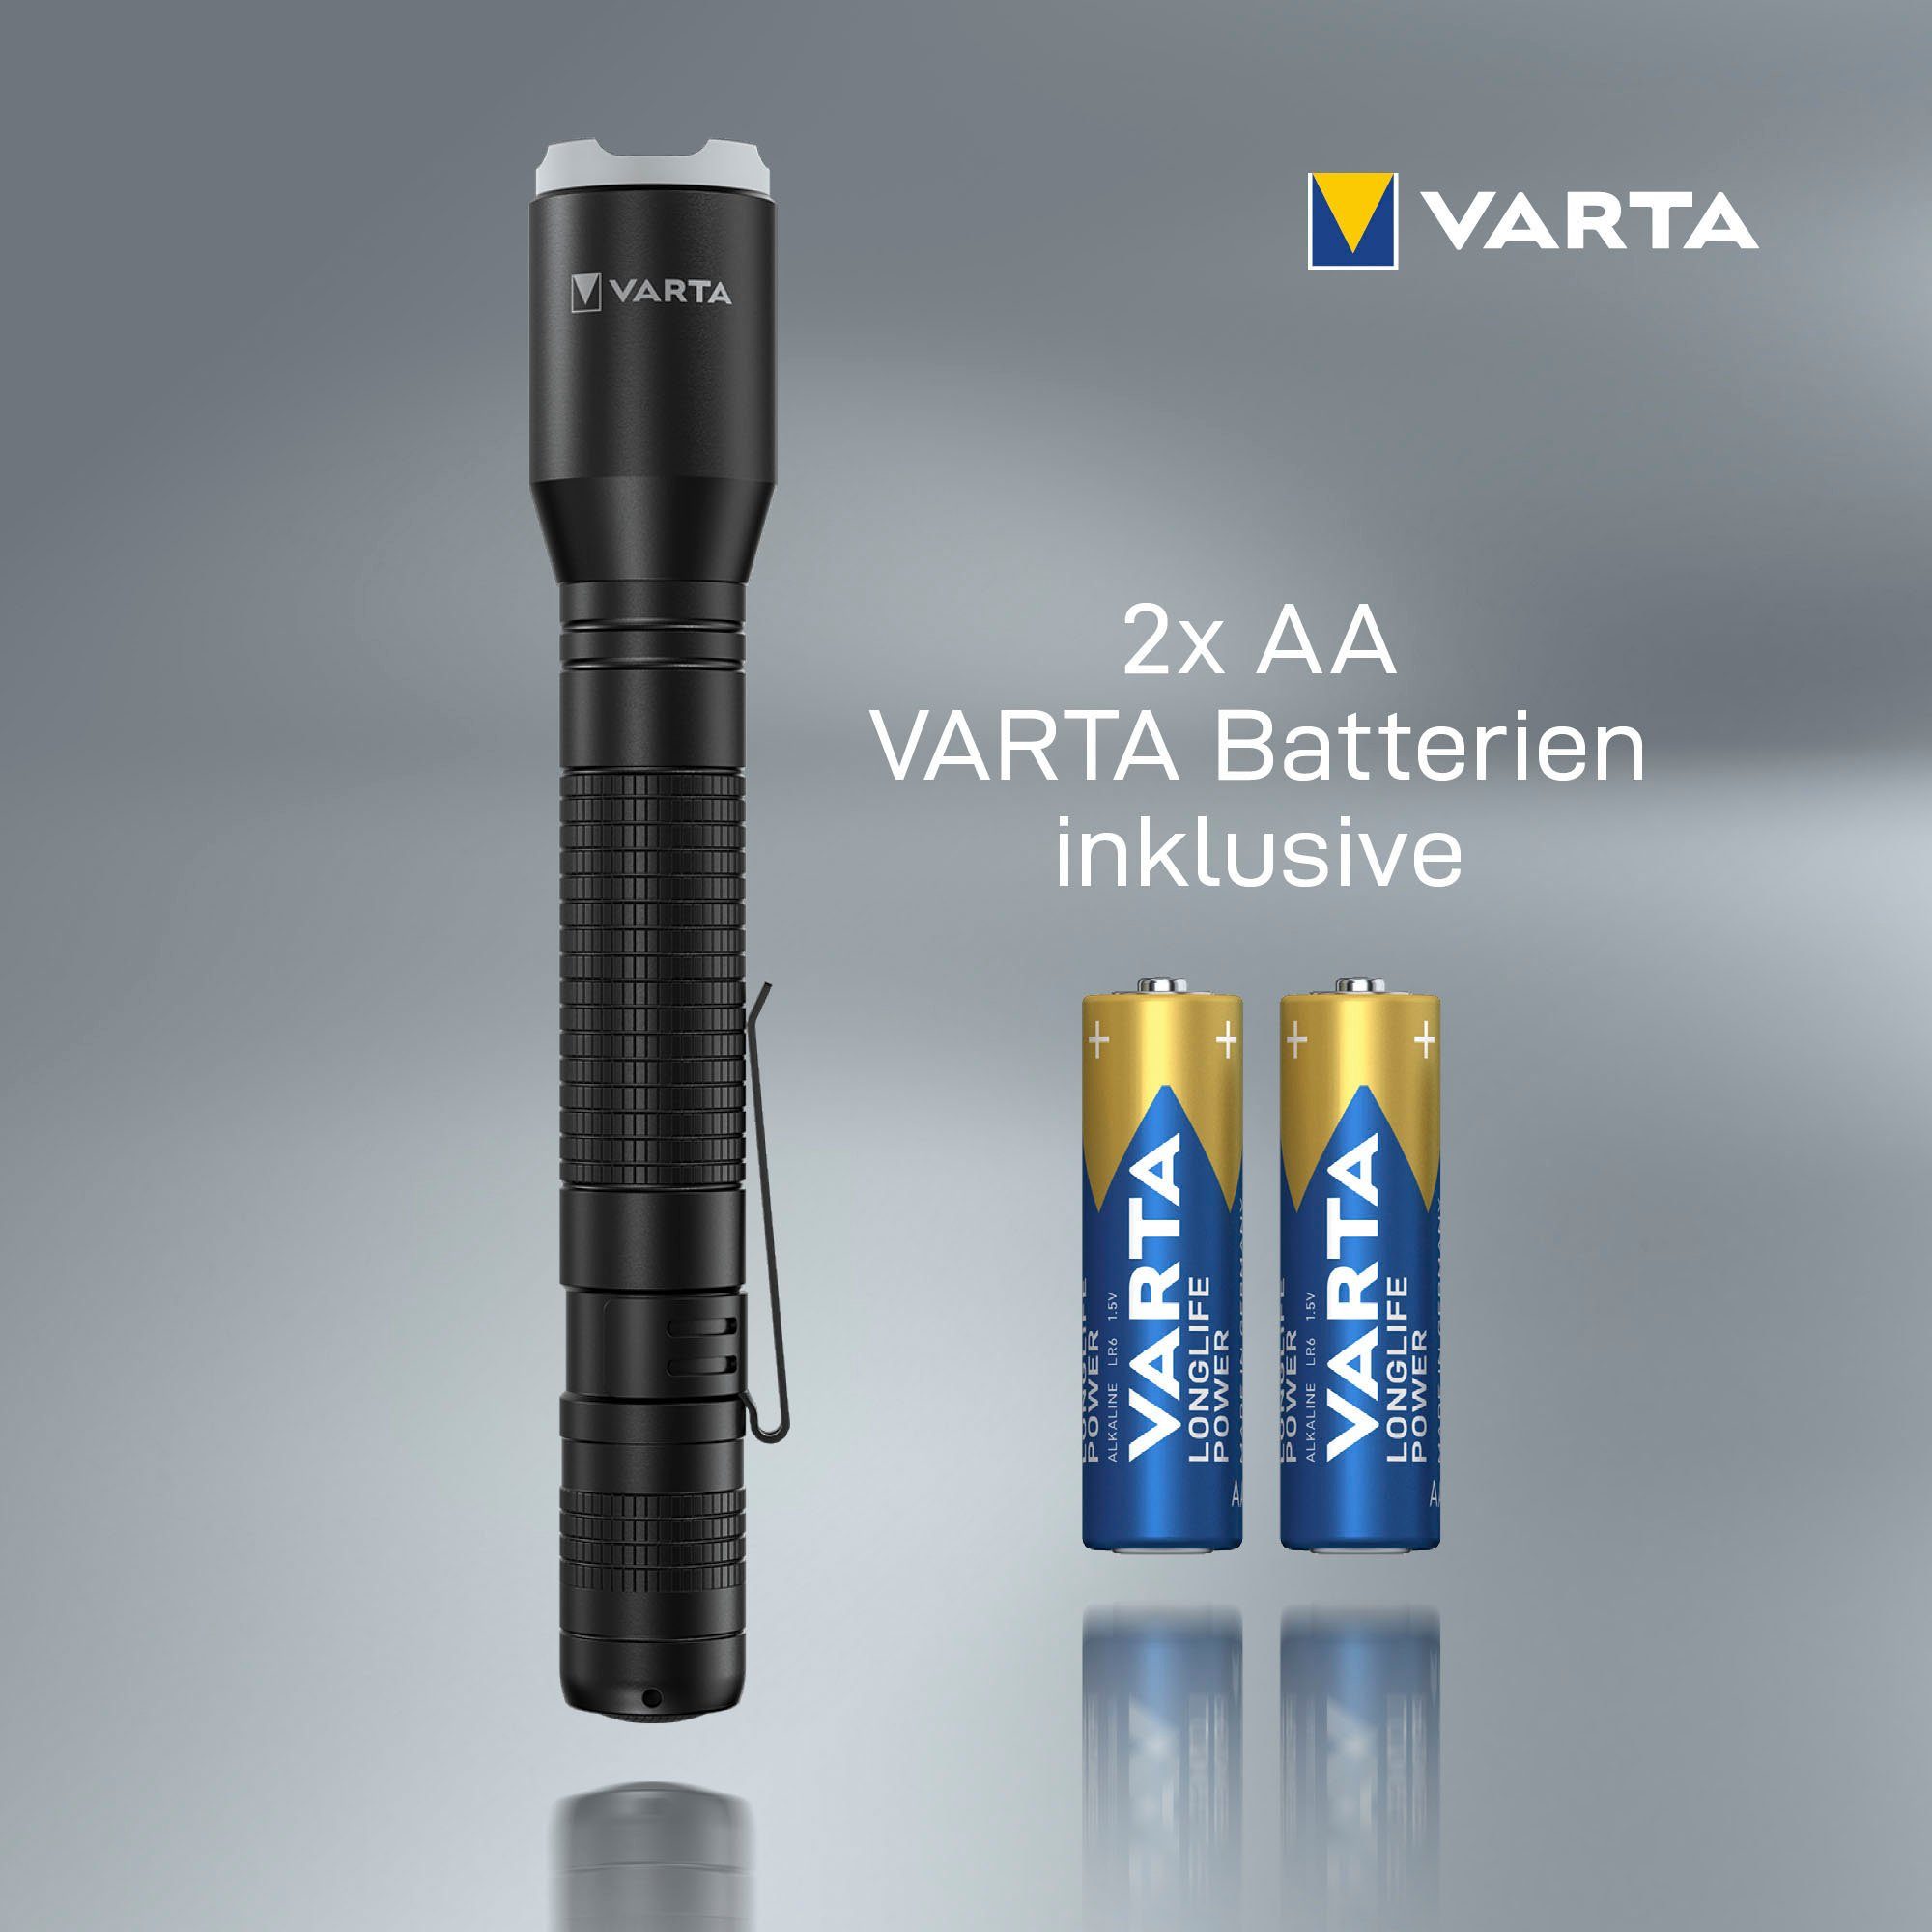 VARTA Taschenlampe Aluminium Light F20 (1-St) Pro